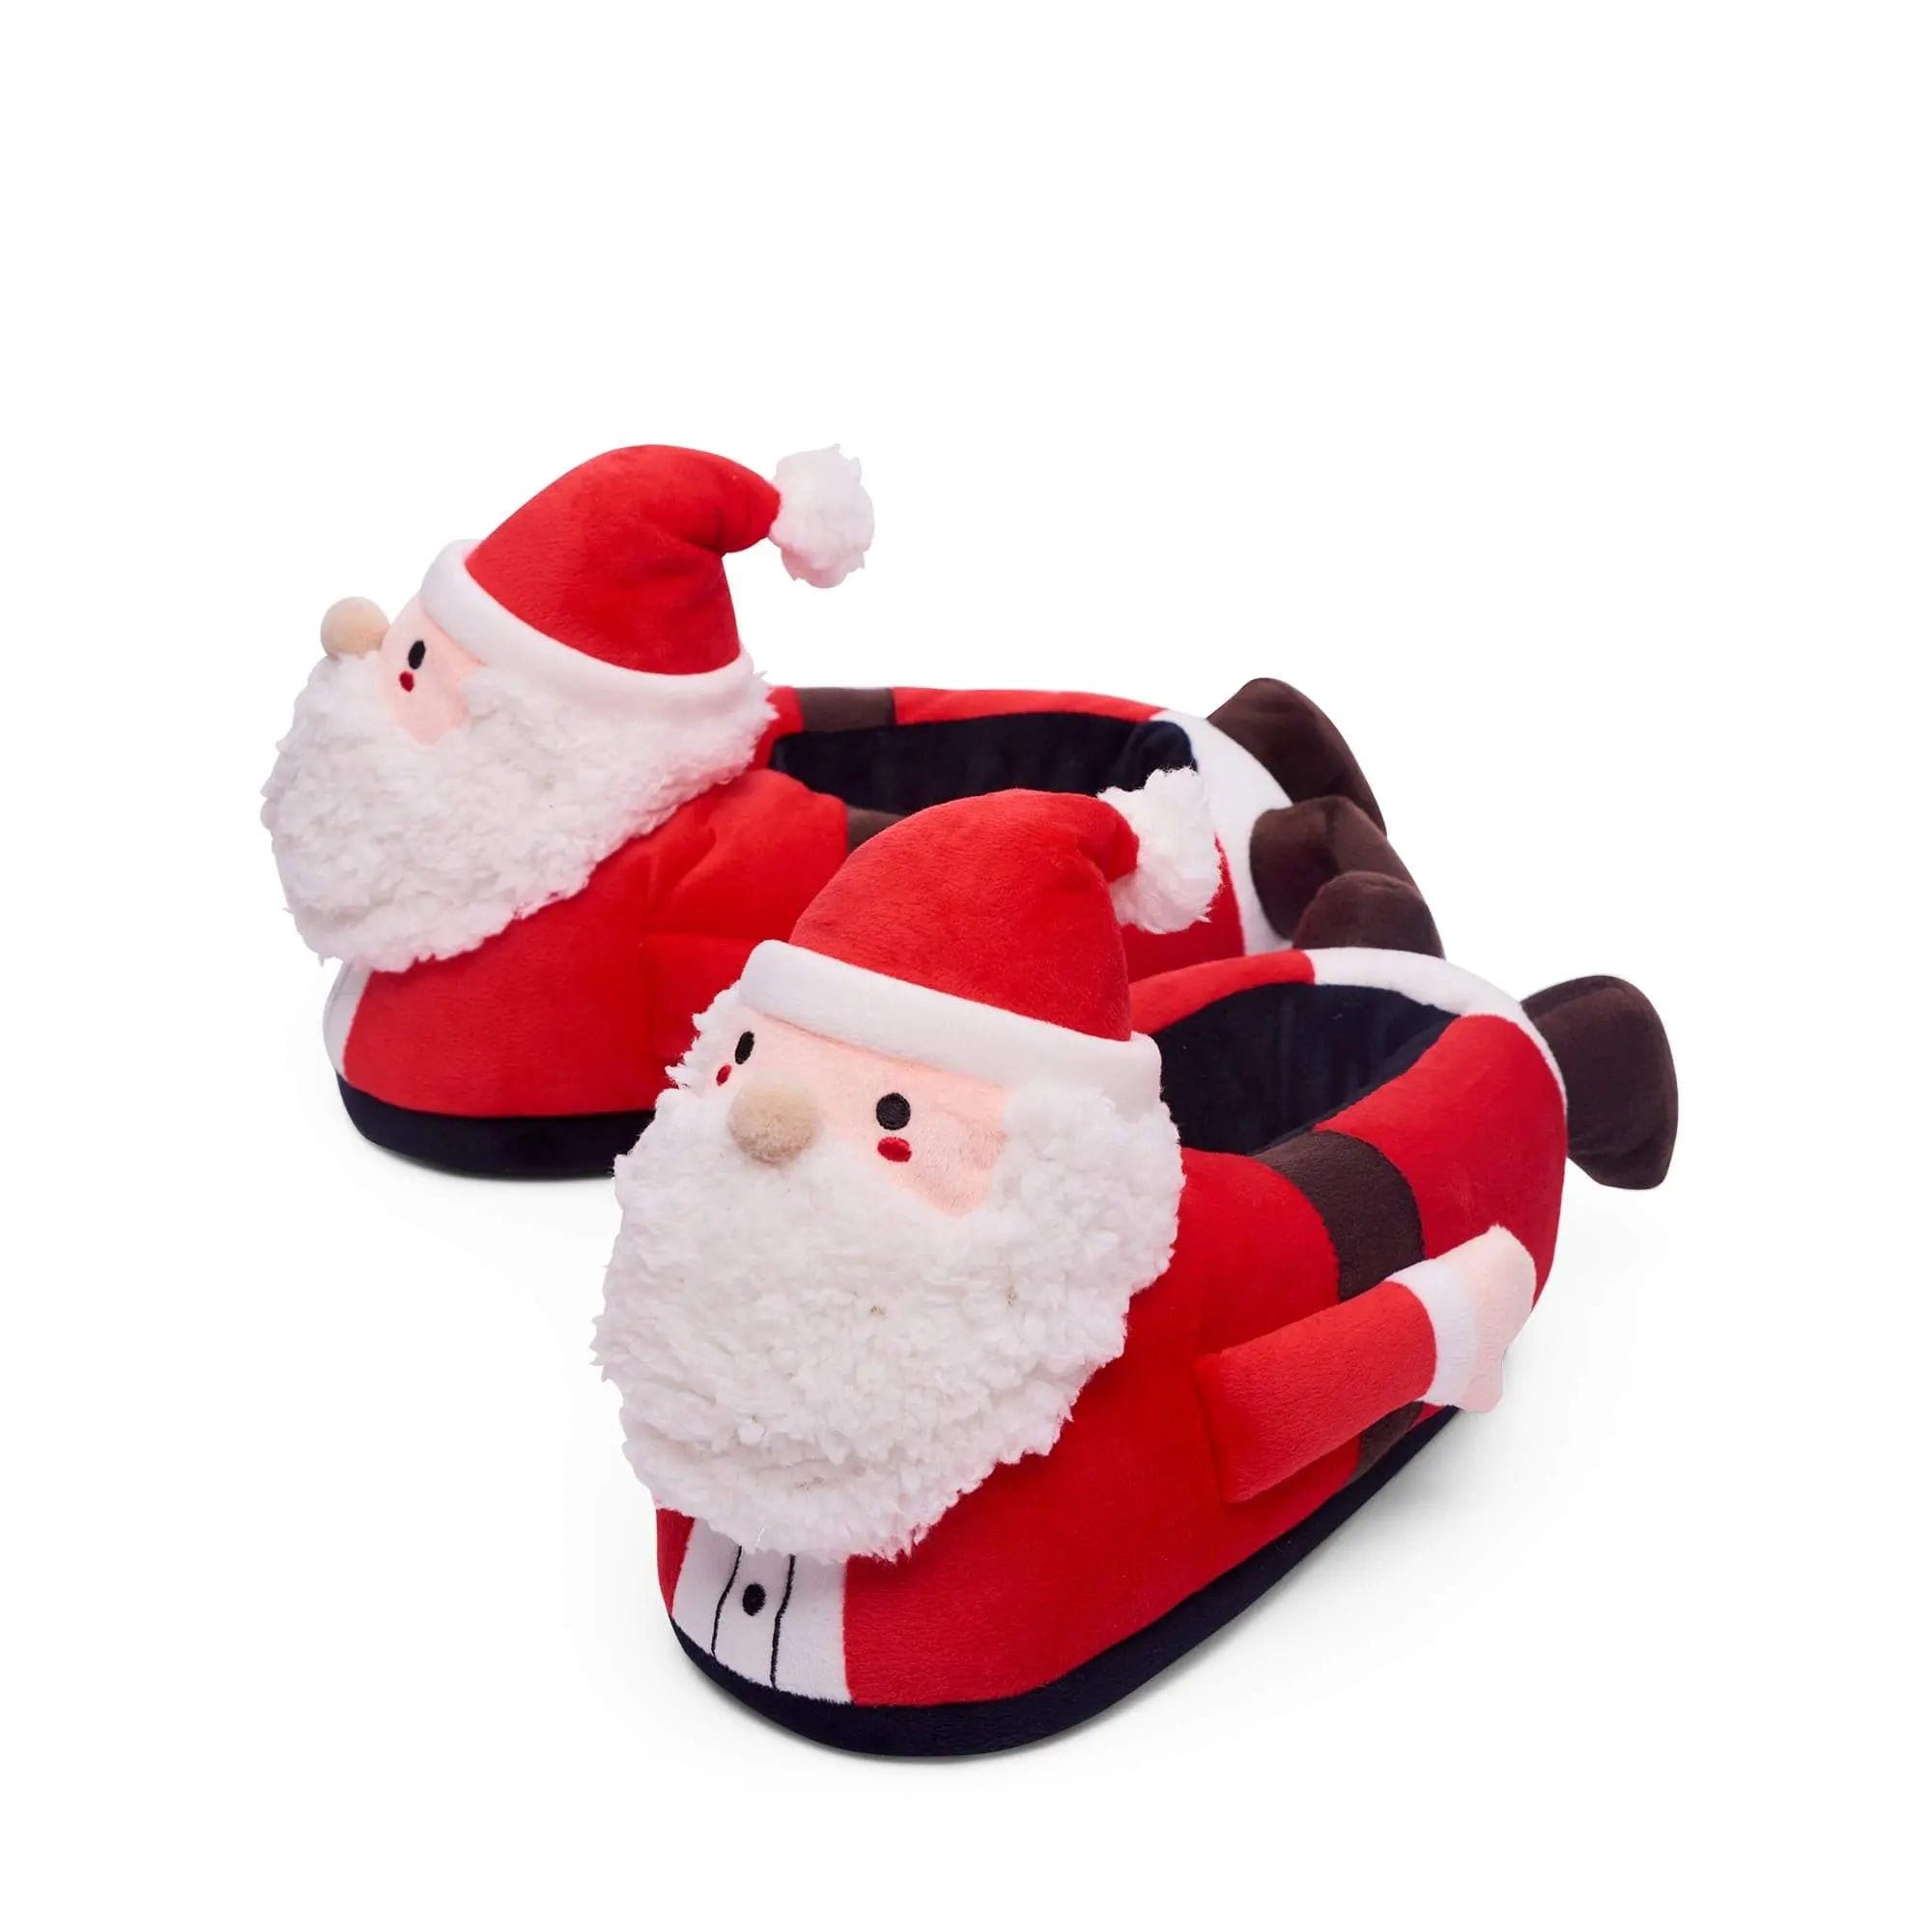 Coddies Santa Slippers Secret Santa Gift Funny Slippers for Men, Women &  Kids Santa Slippers for the Holidays 3 Sizes: S, M, L 